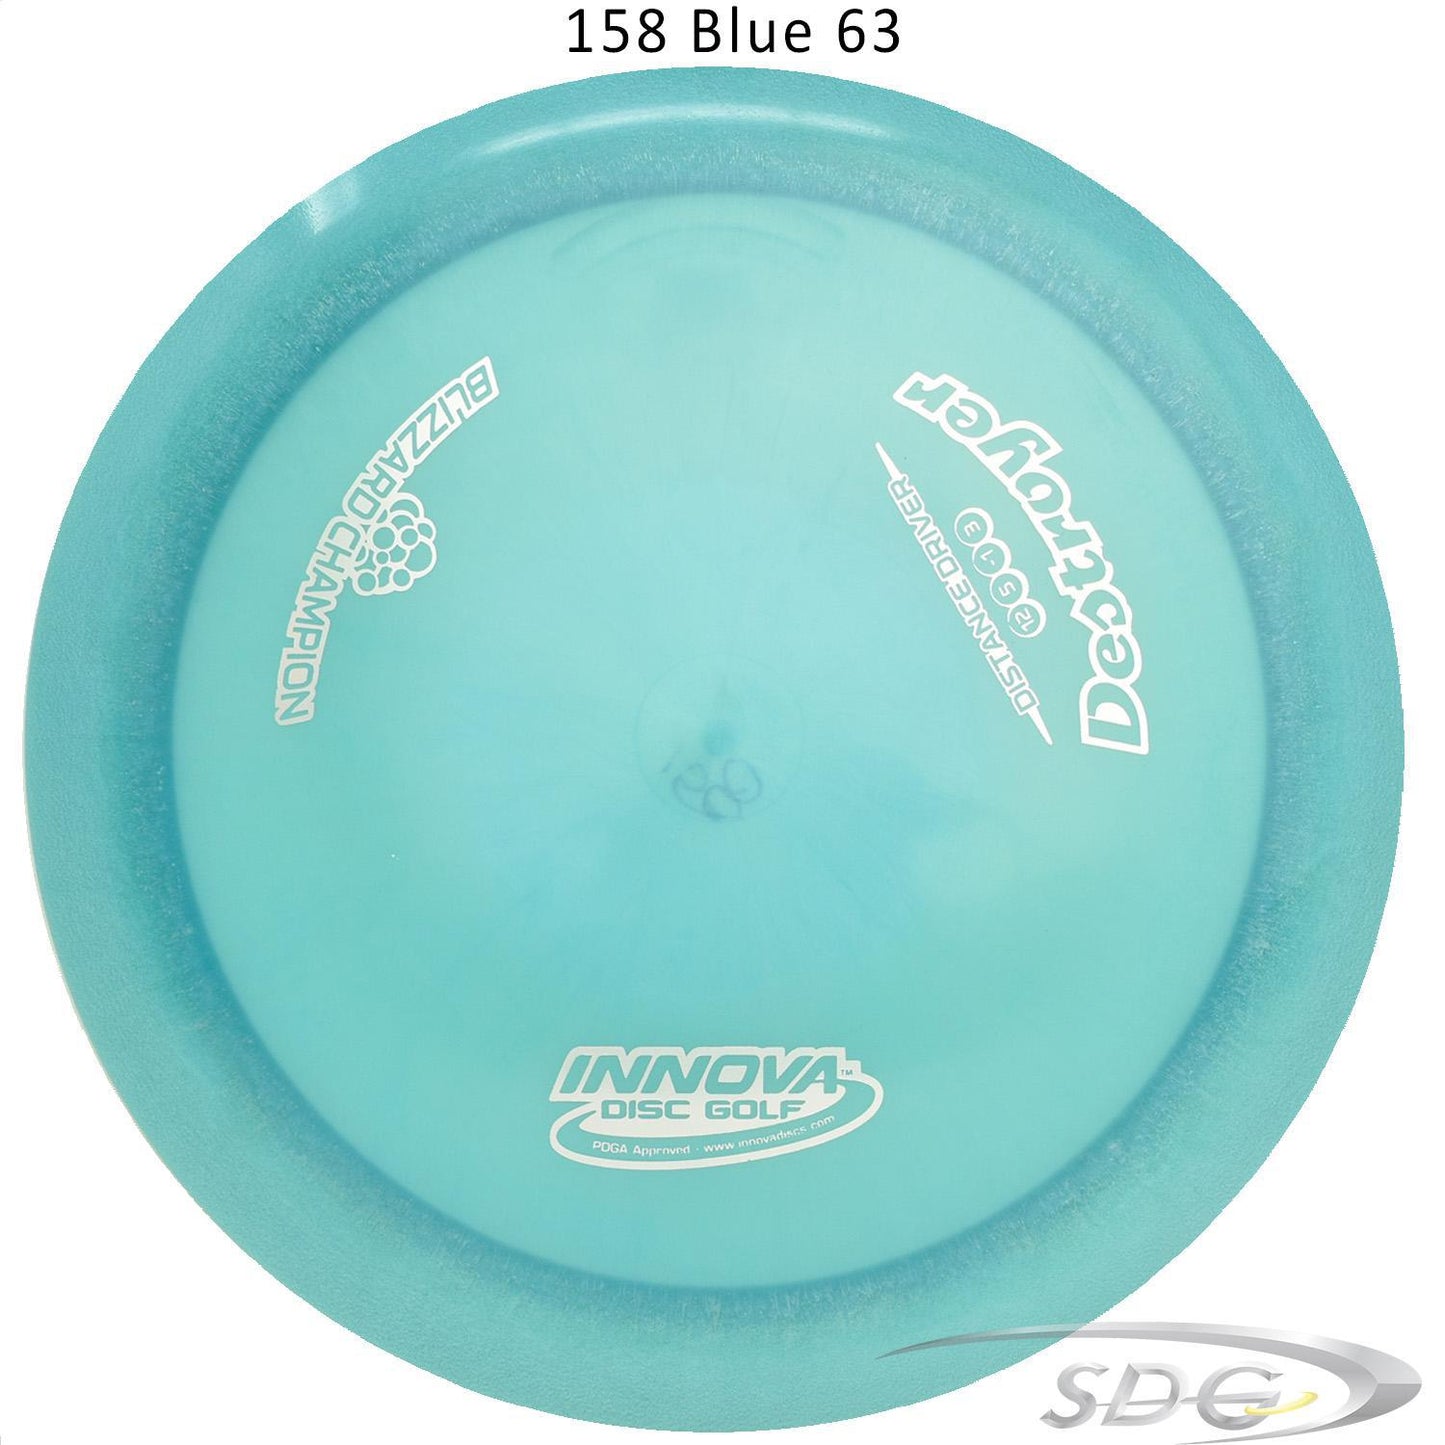 innova-blizzard-champion-destroyer-disc-golf-distance-driver 158 Blue 63 